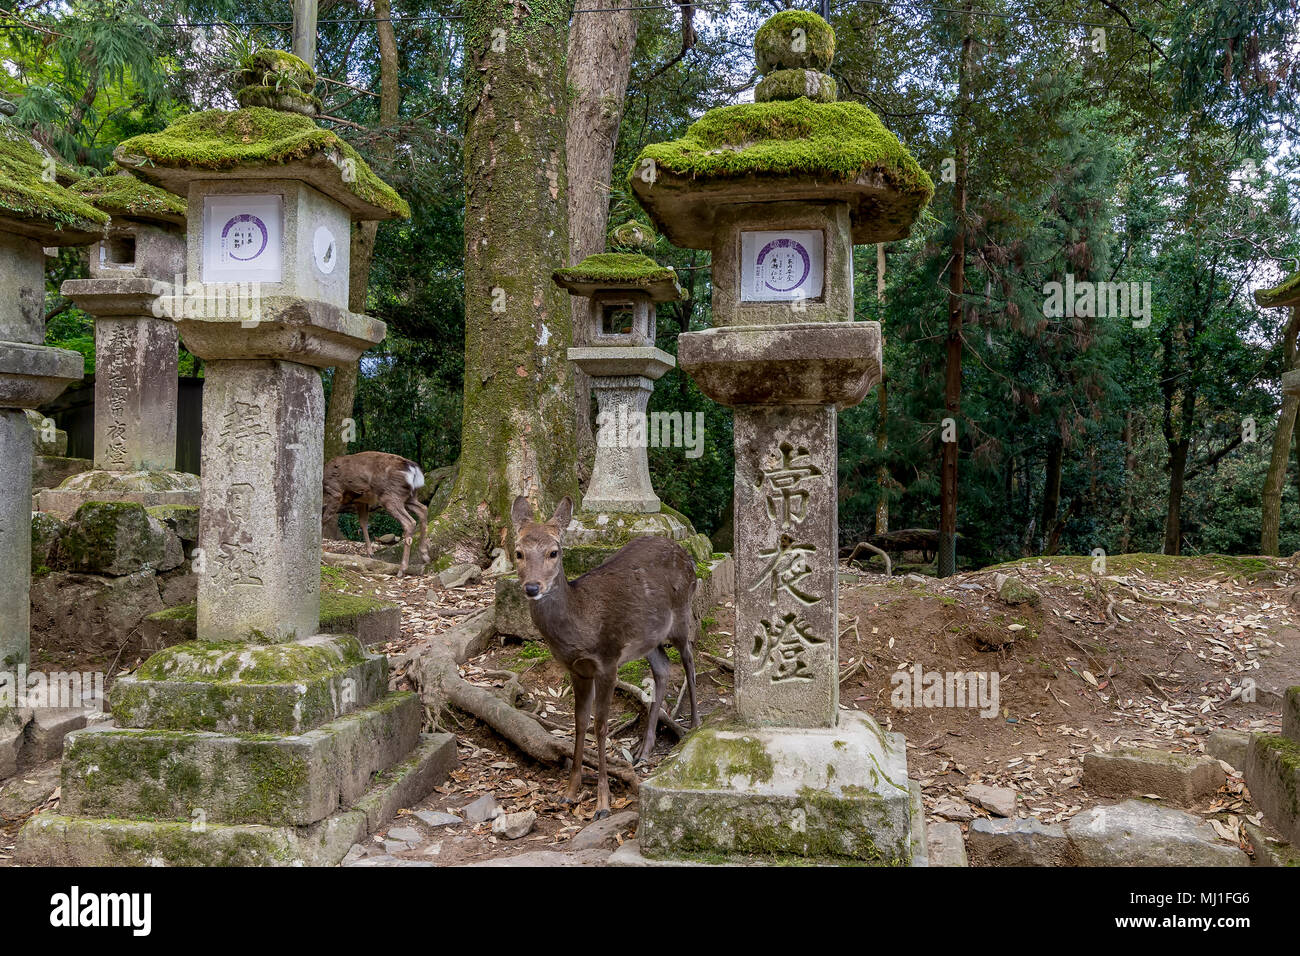 Fallow deer and stone lanterns in the Kasuga Shrine of Nara, Japan Stock Photo